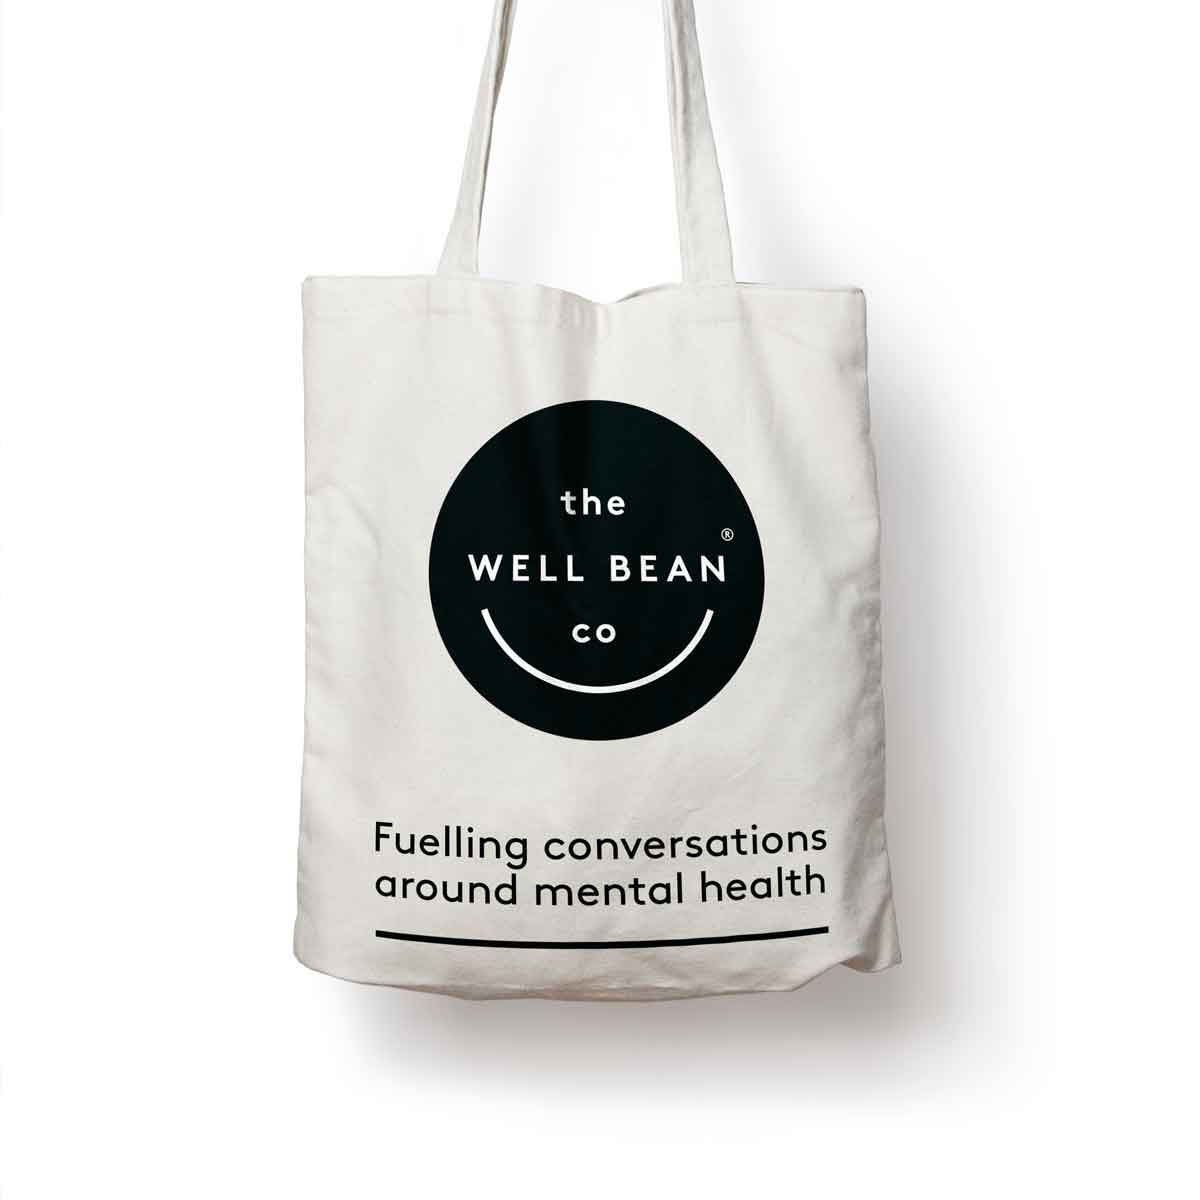 Fuelling conversations around mental health